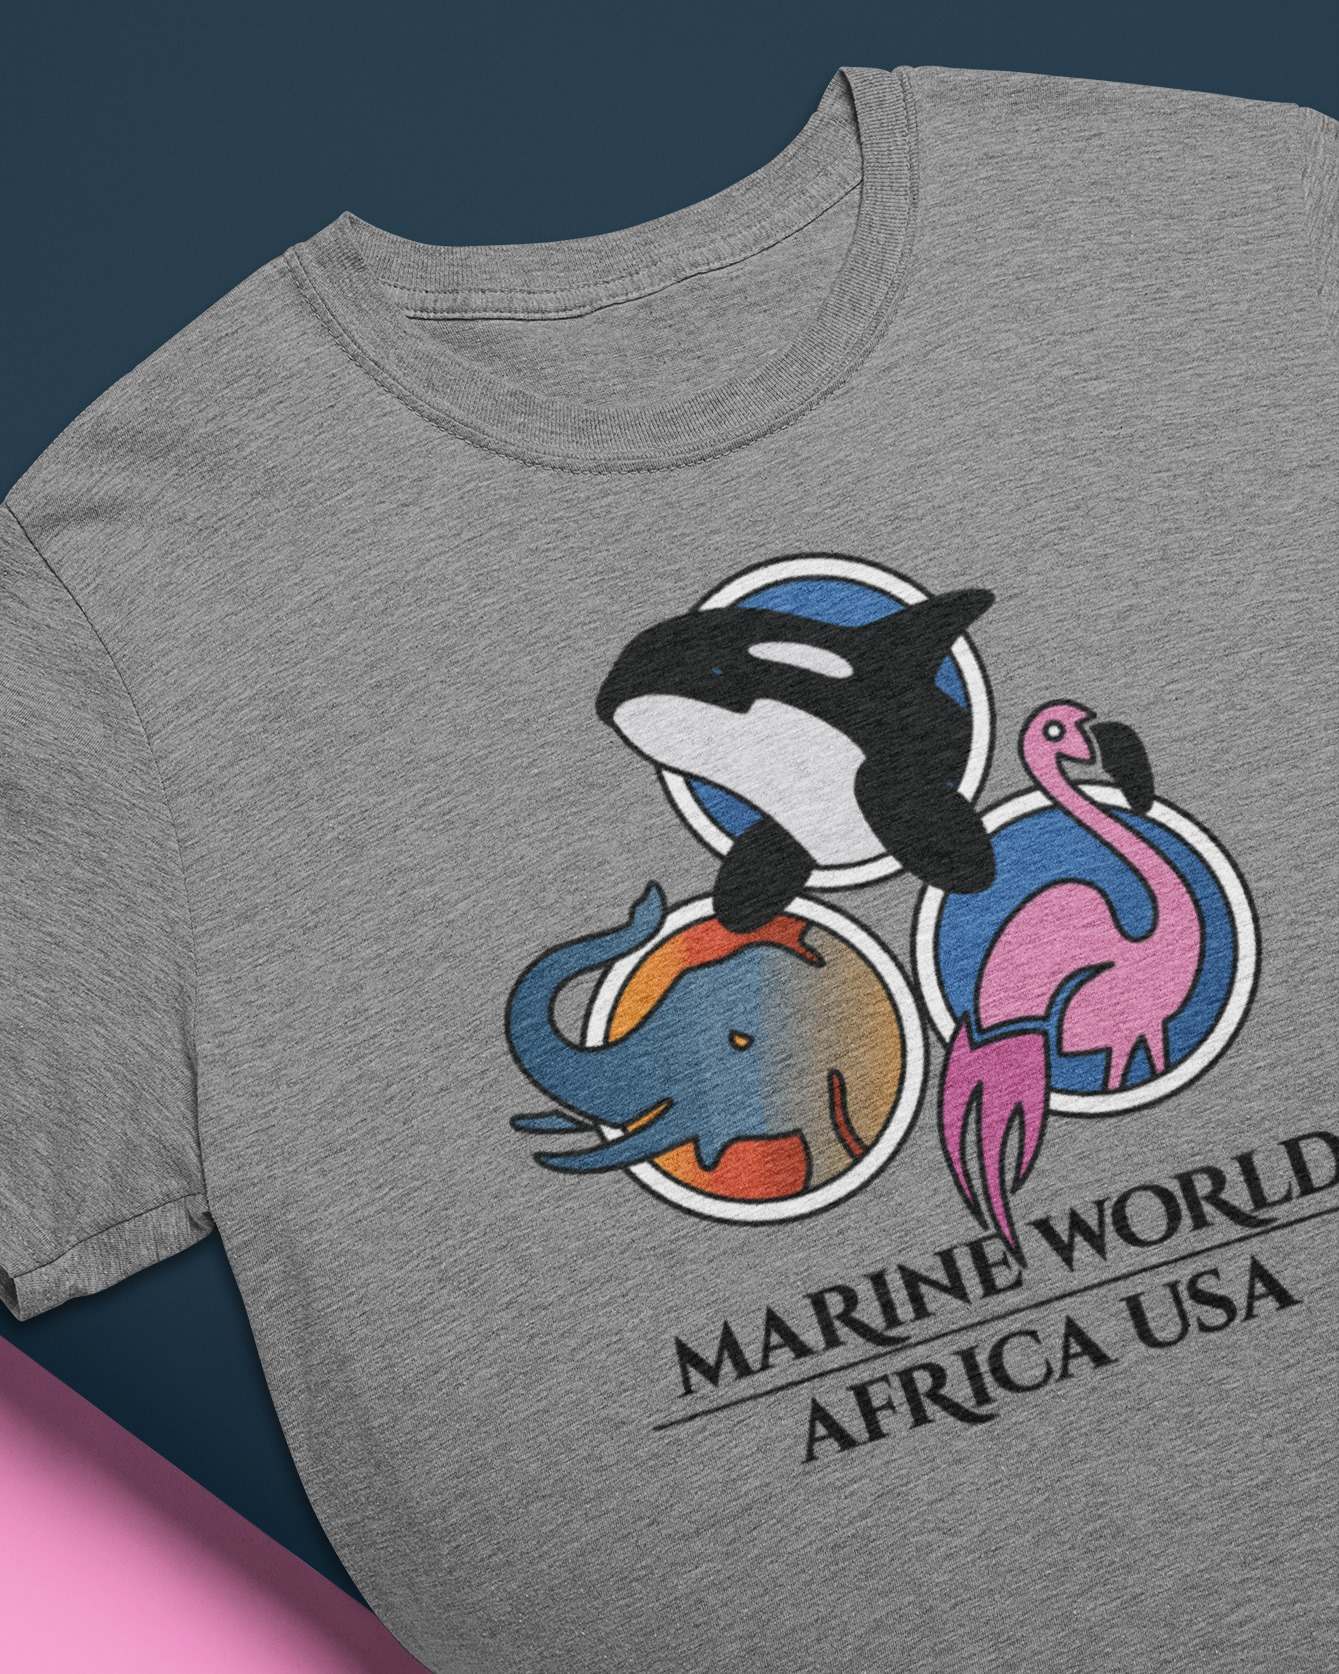 Dolphin Flamingo Elephant - Marine World Afica USA